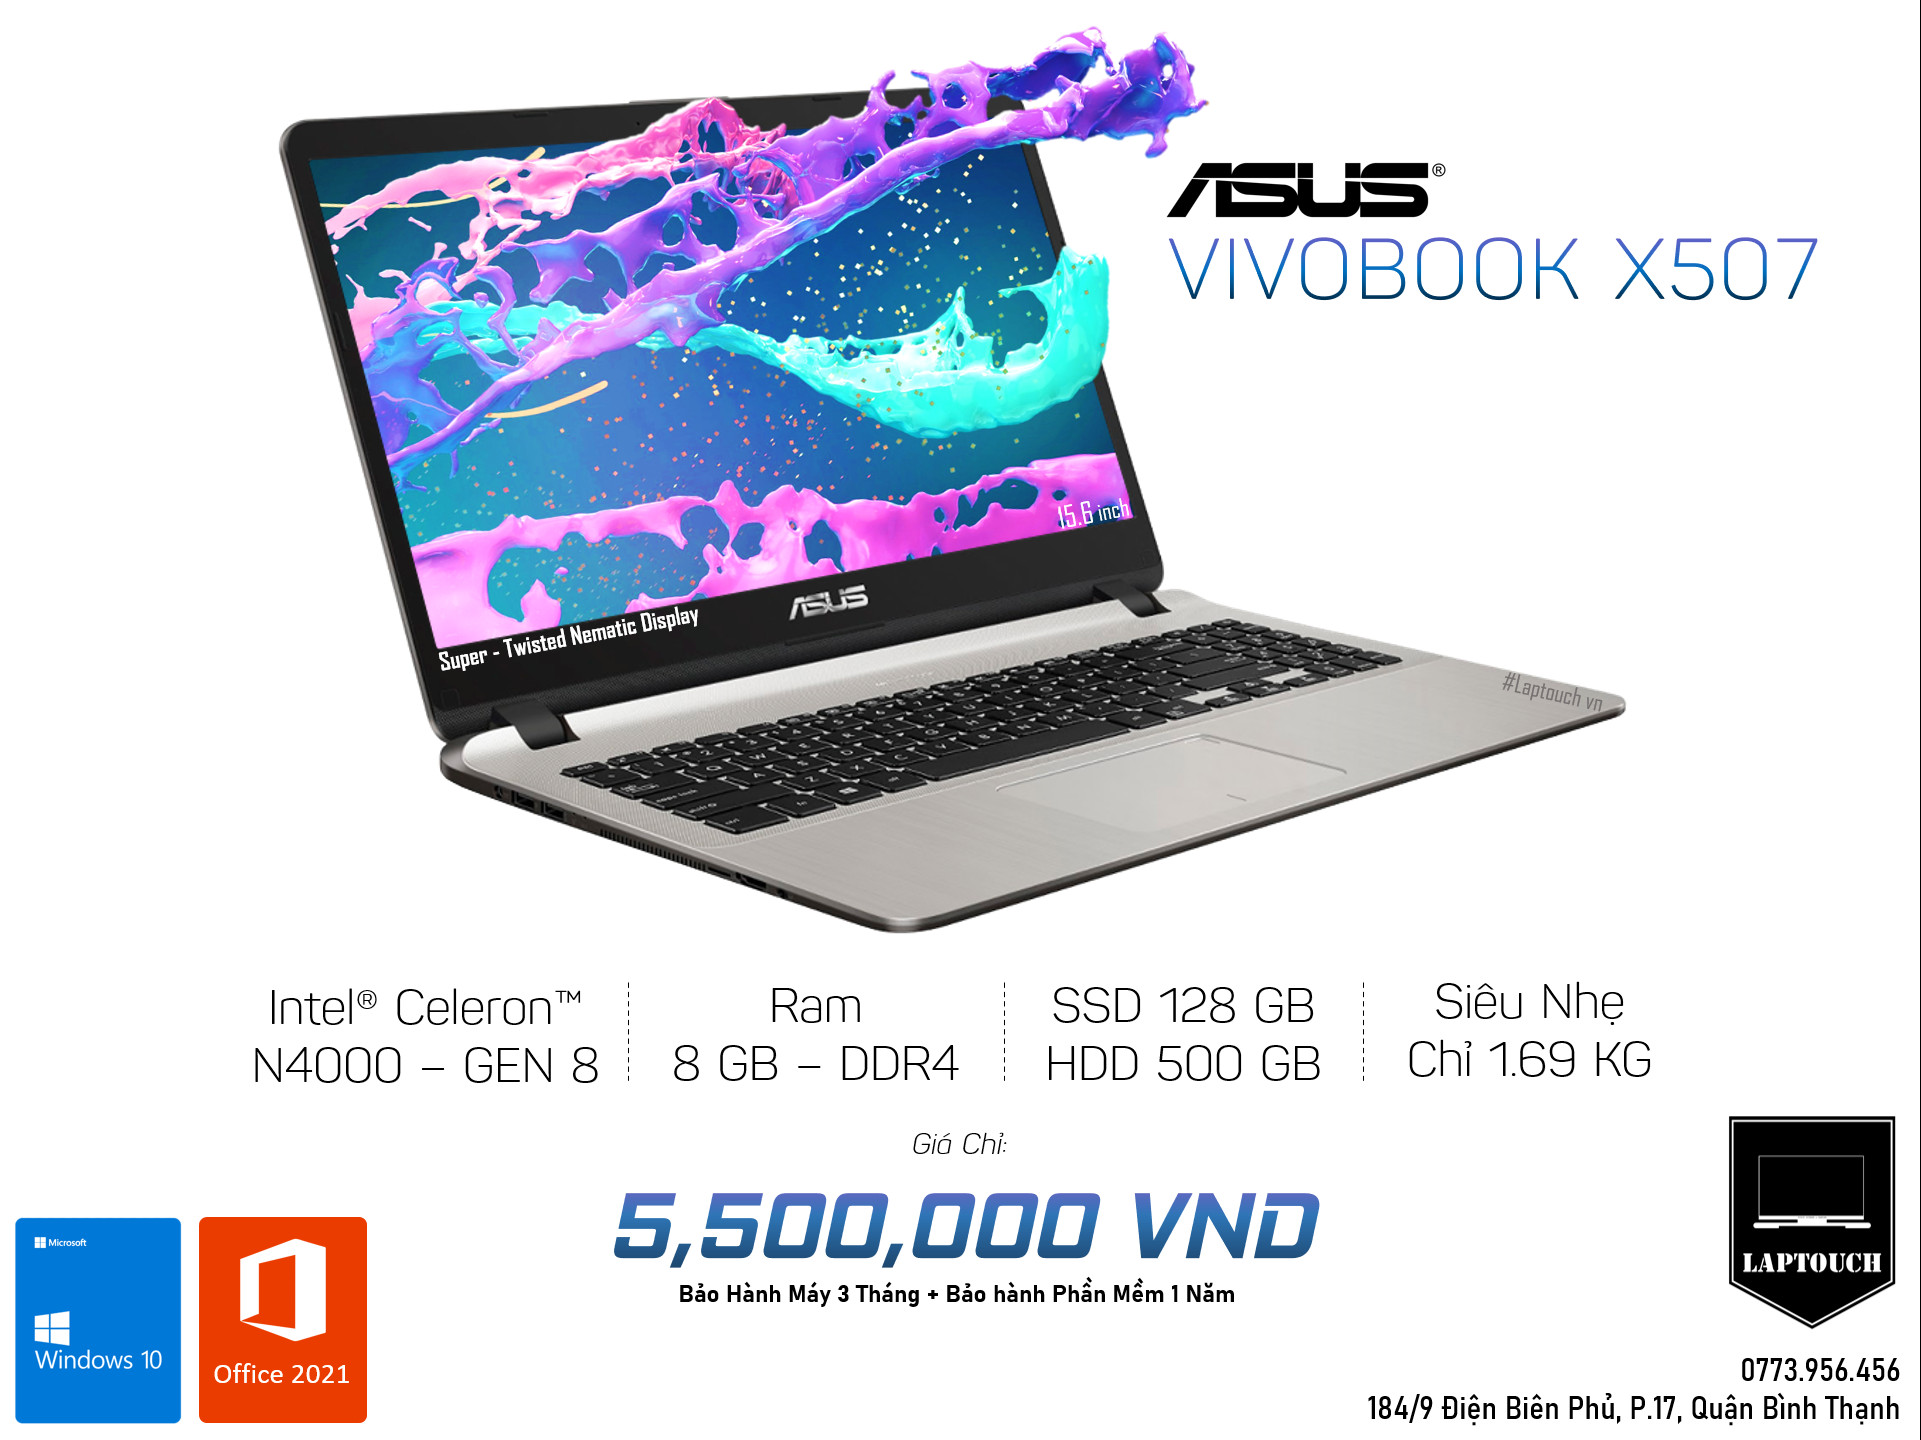 Asus Vivobook X507 